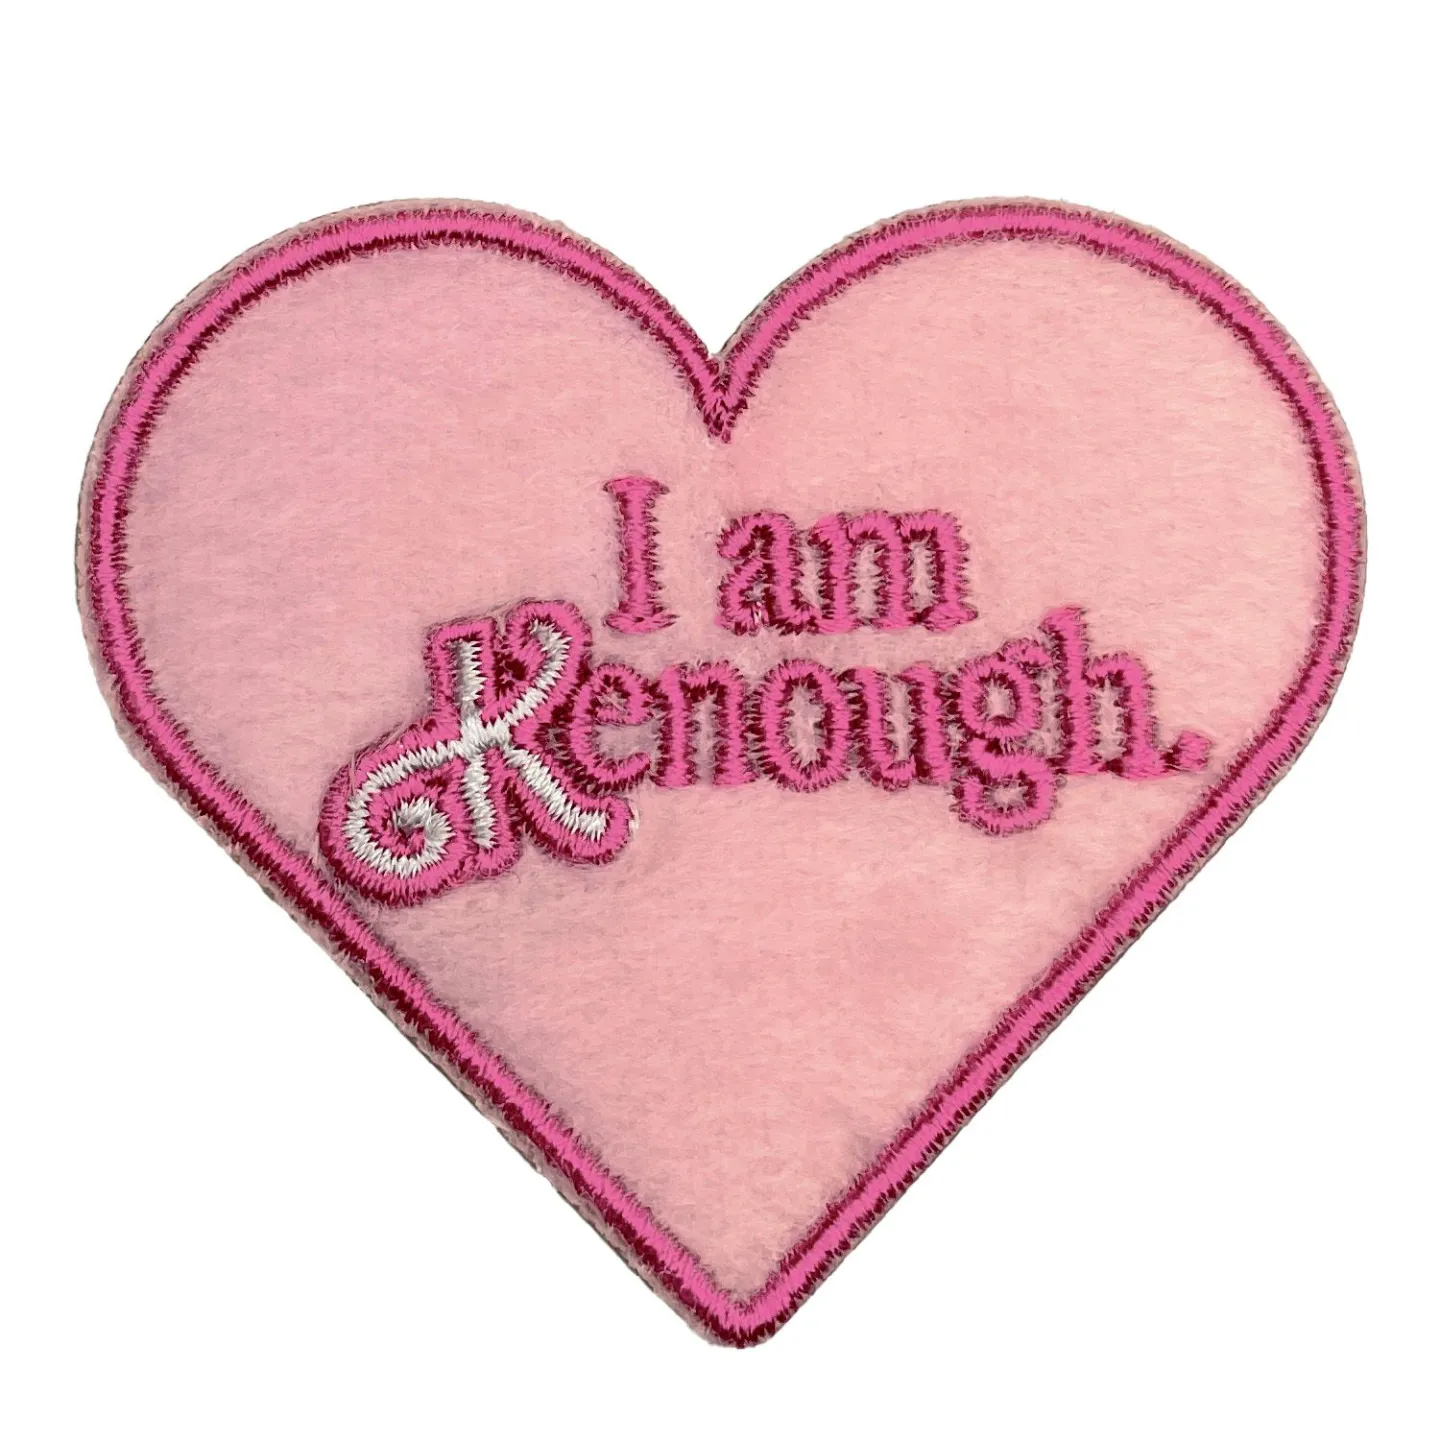 I am kenough.